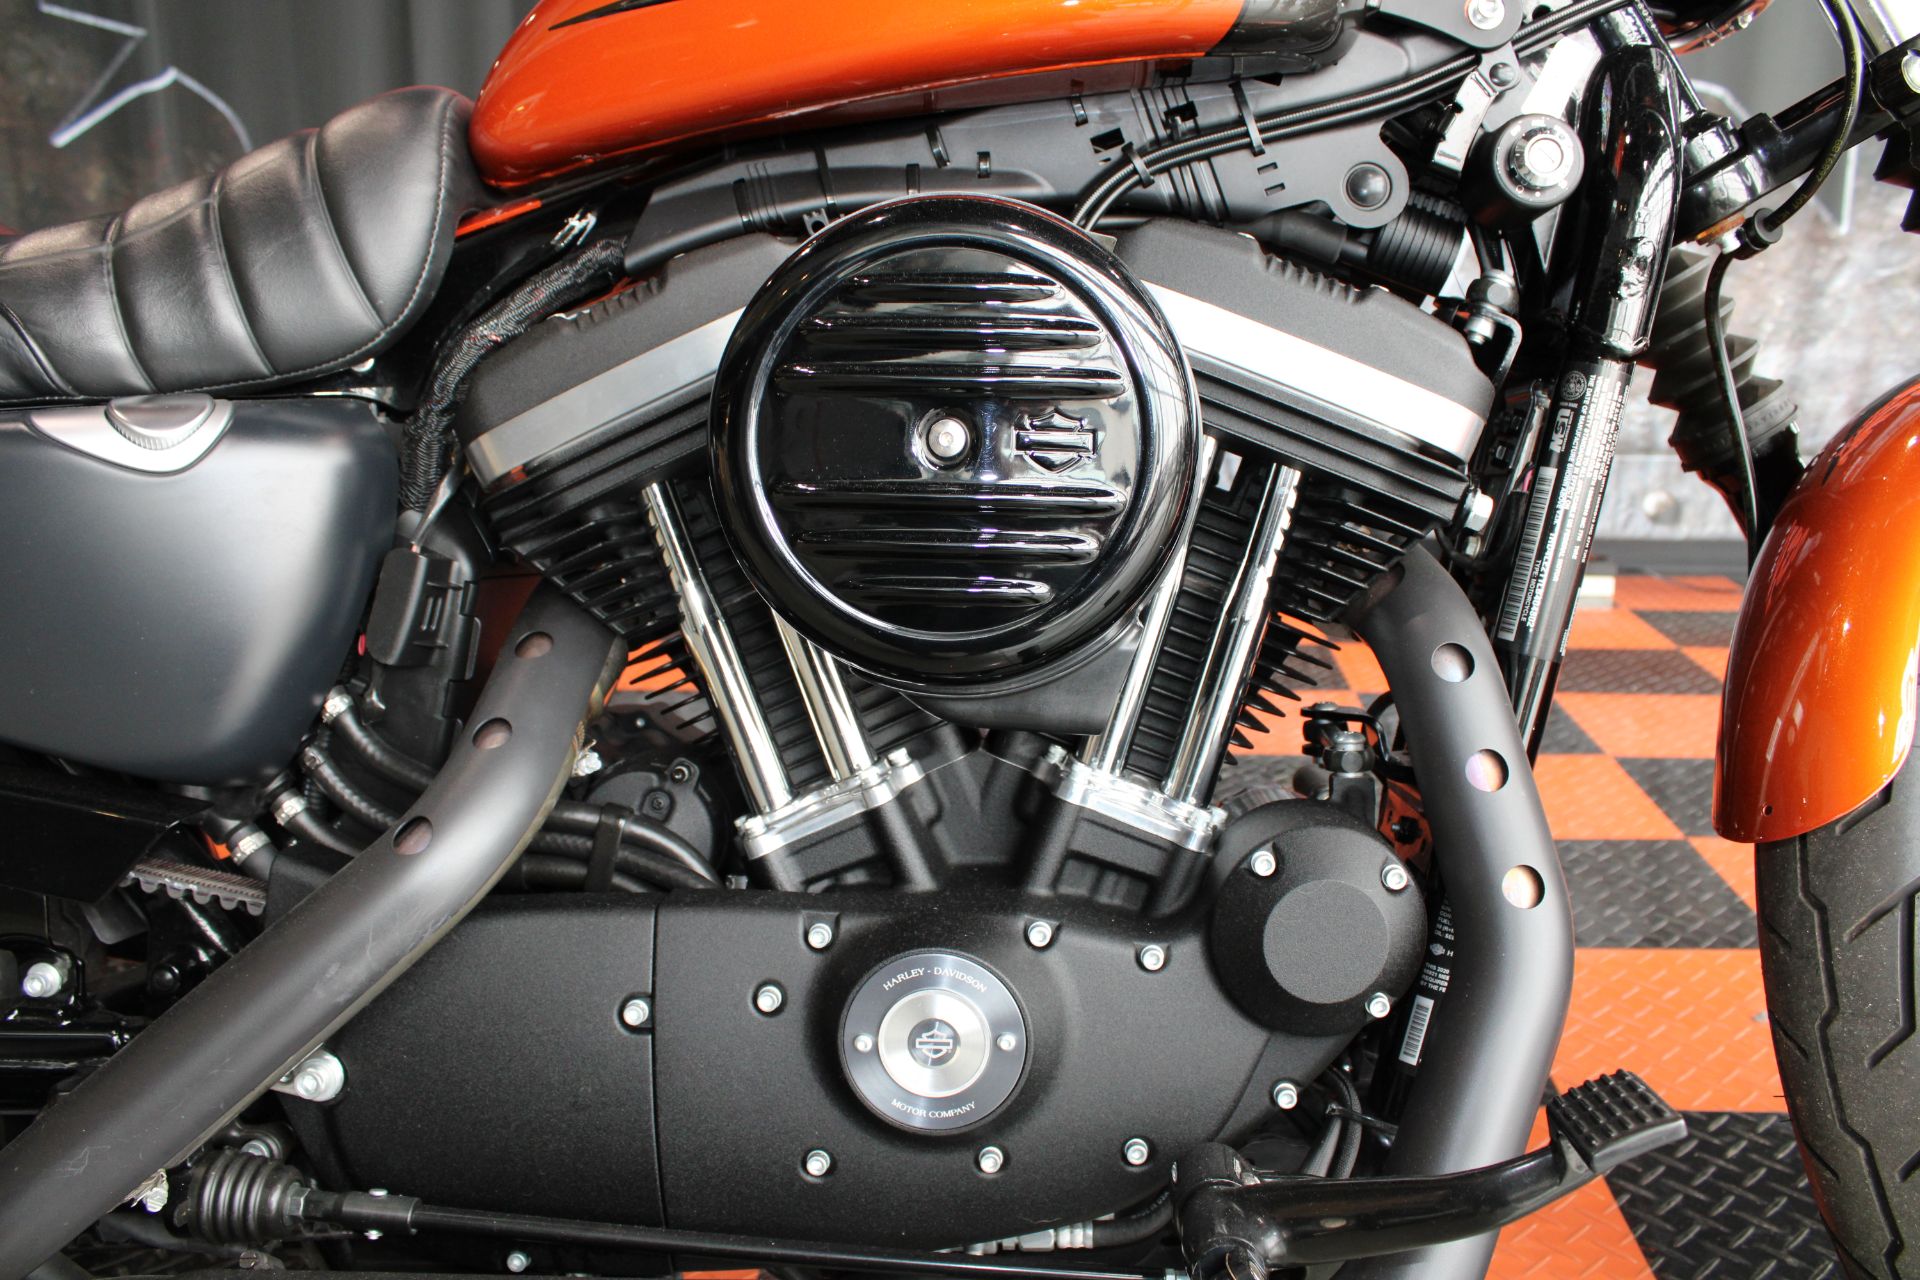 2020 Harley-Davidson Iron 883™ in Shorewood, Illinois - Photo 5